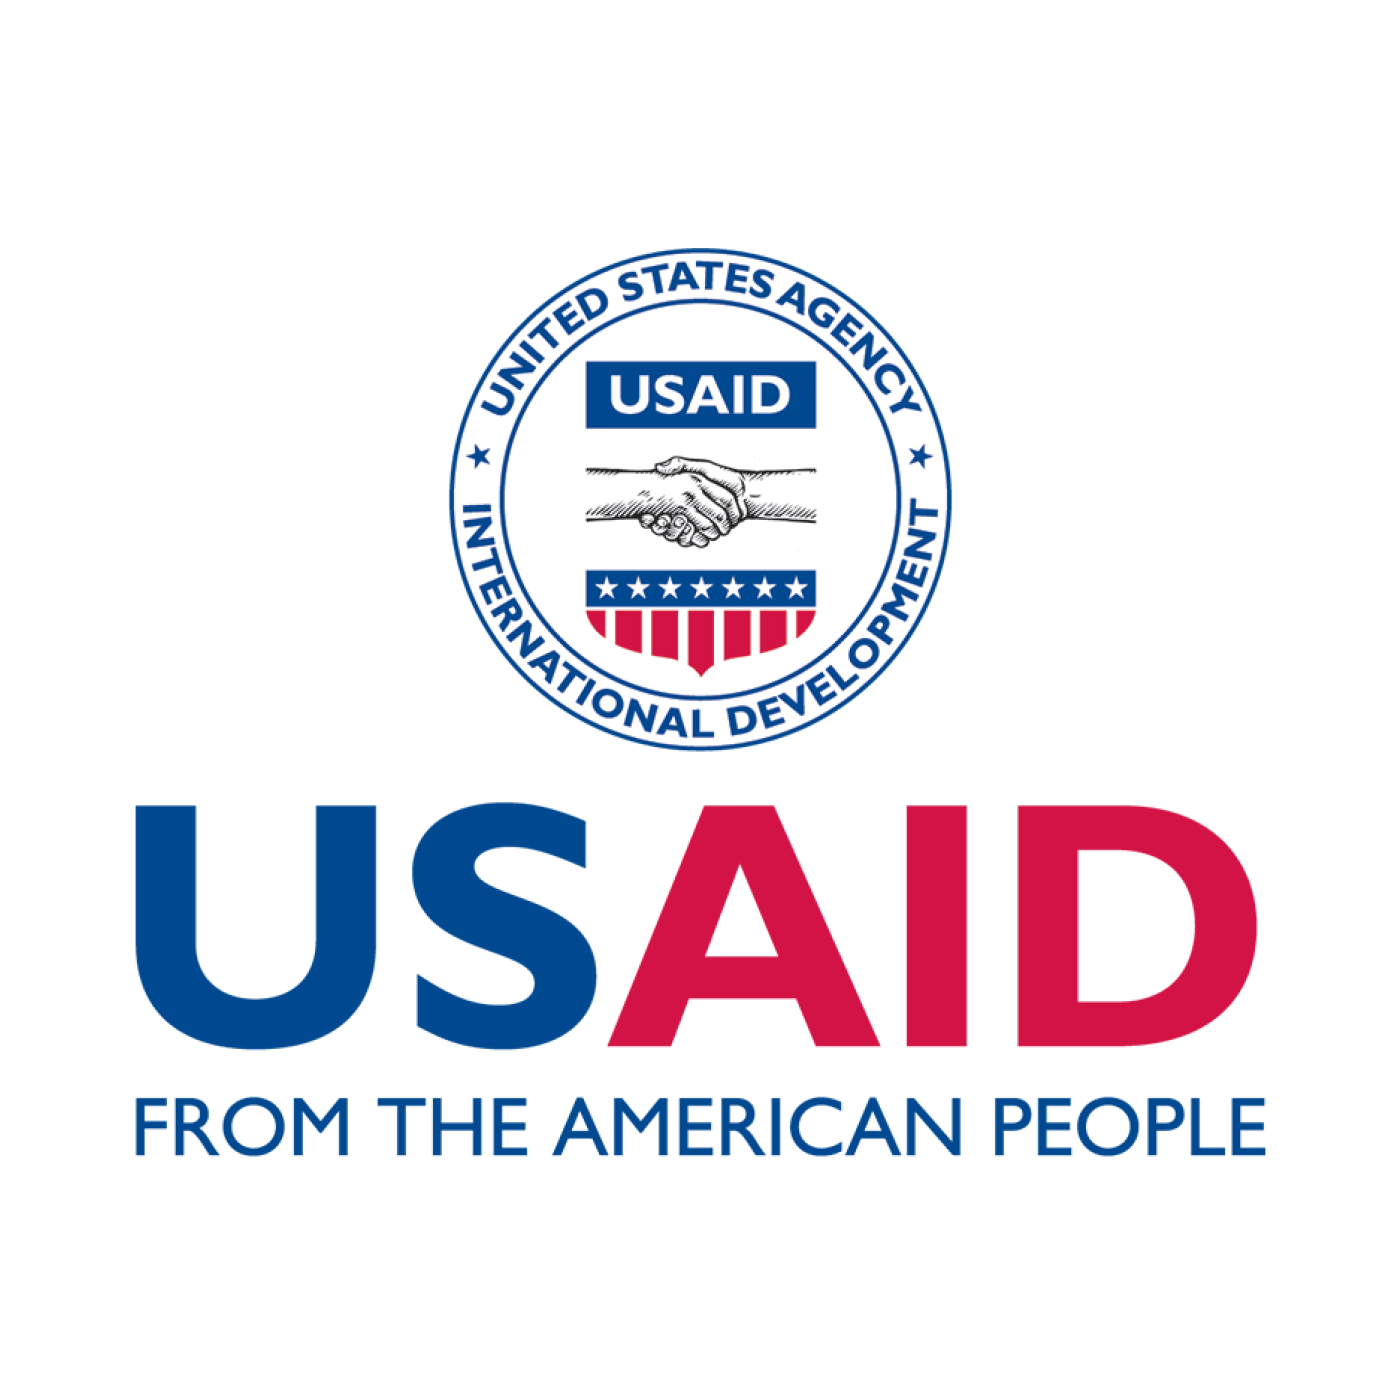 United States Agency for International Development (USAID) logo